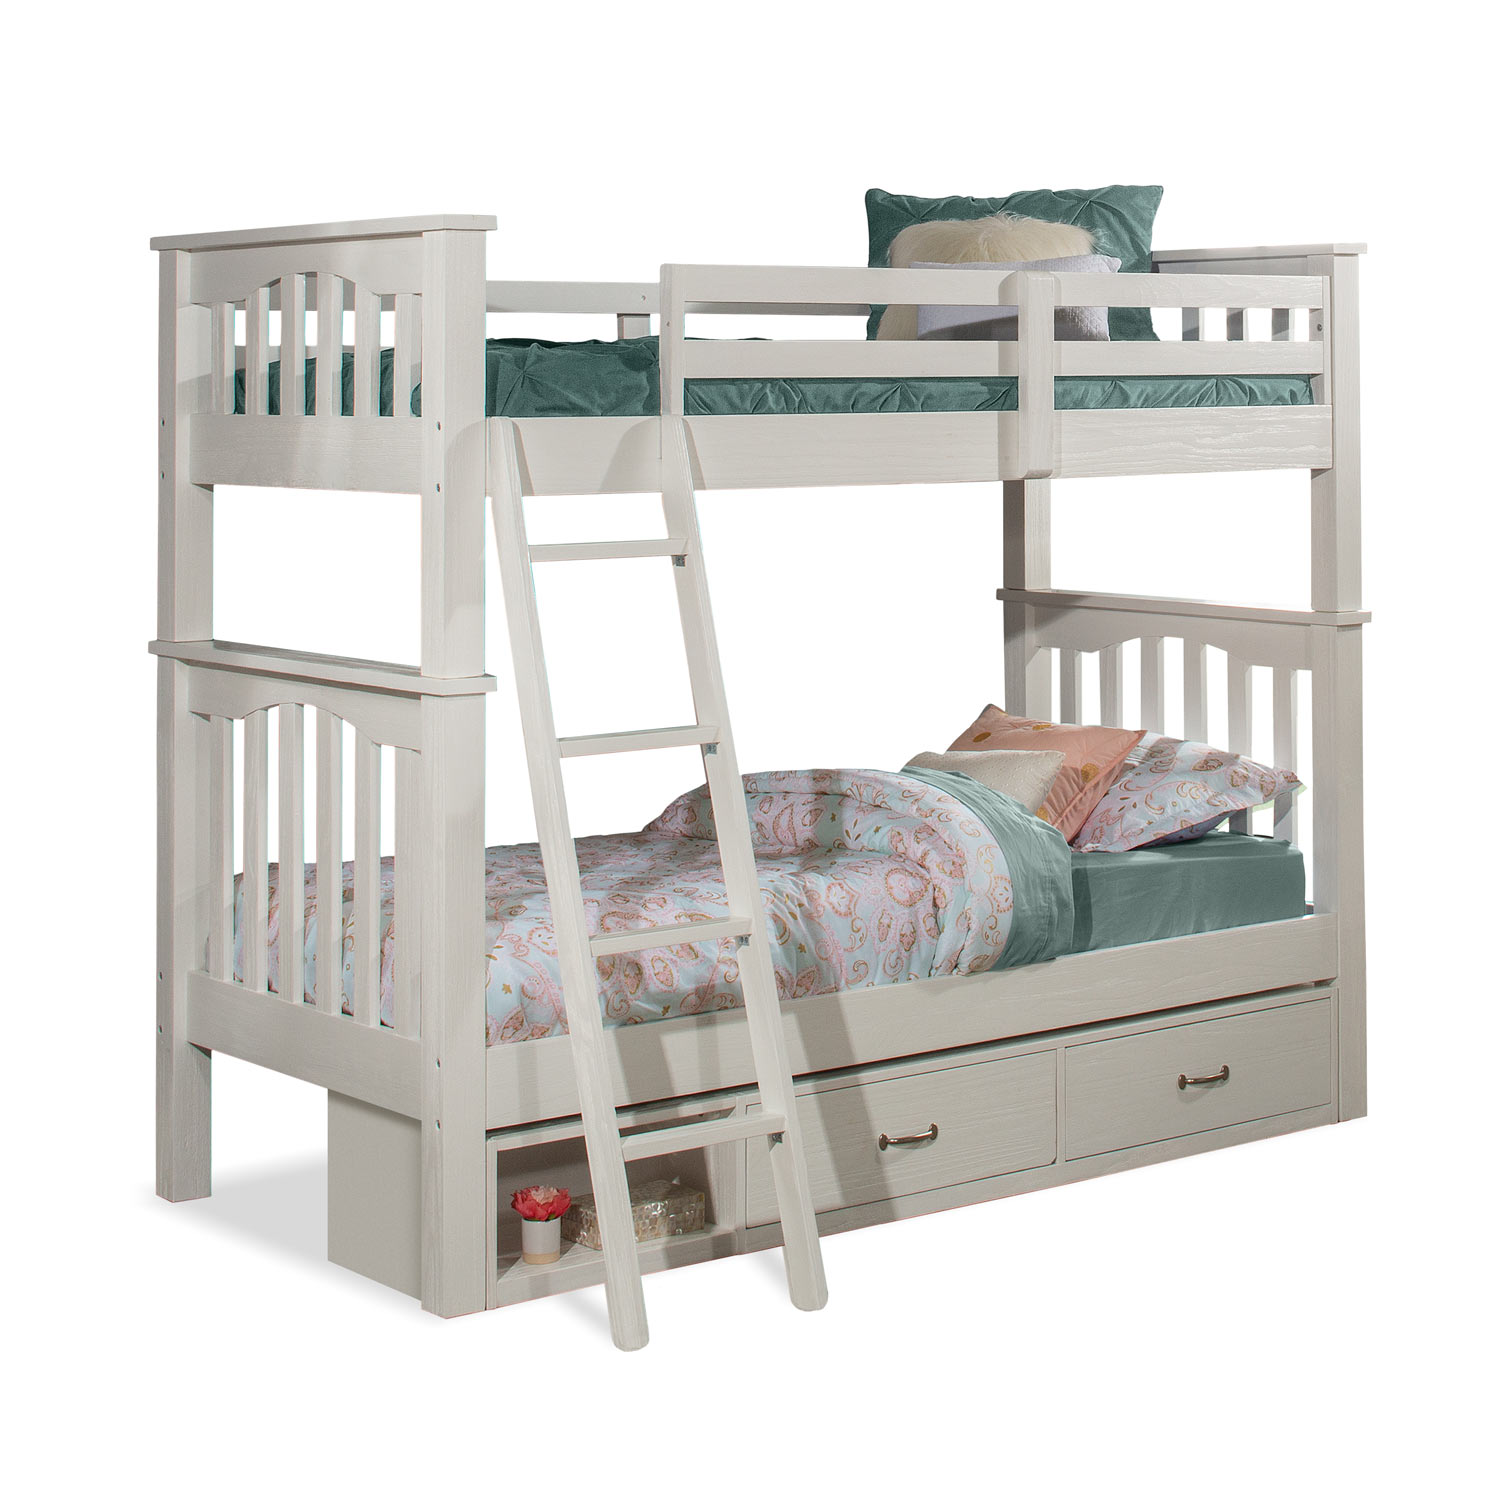 NE Kids Highlands Harper Twin/Twin Bunk Bed with Storage Unit - White Finish